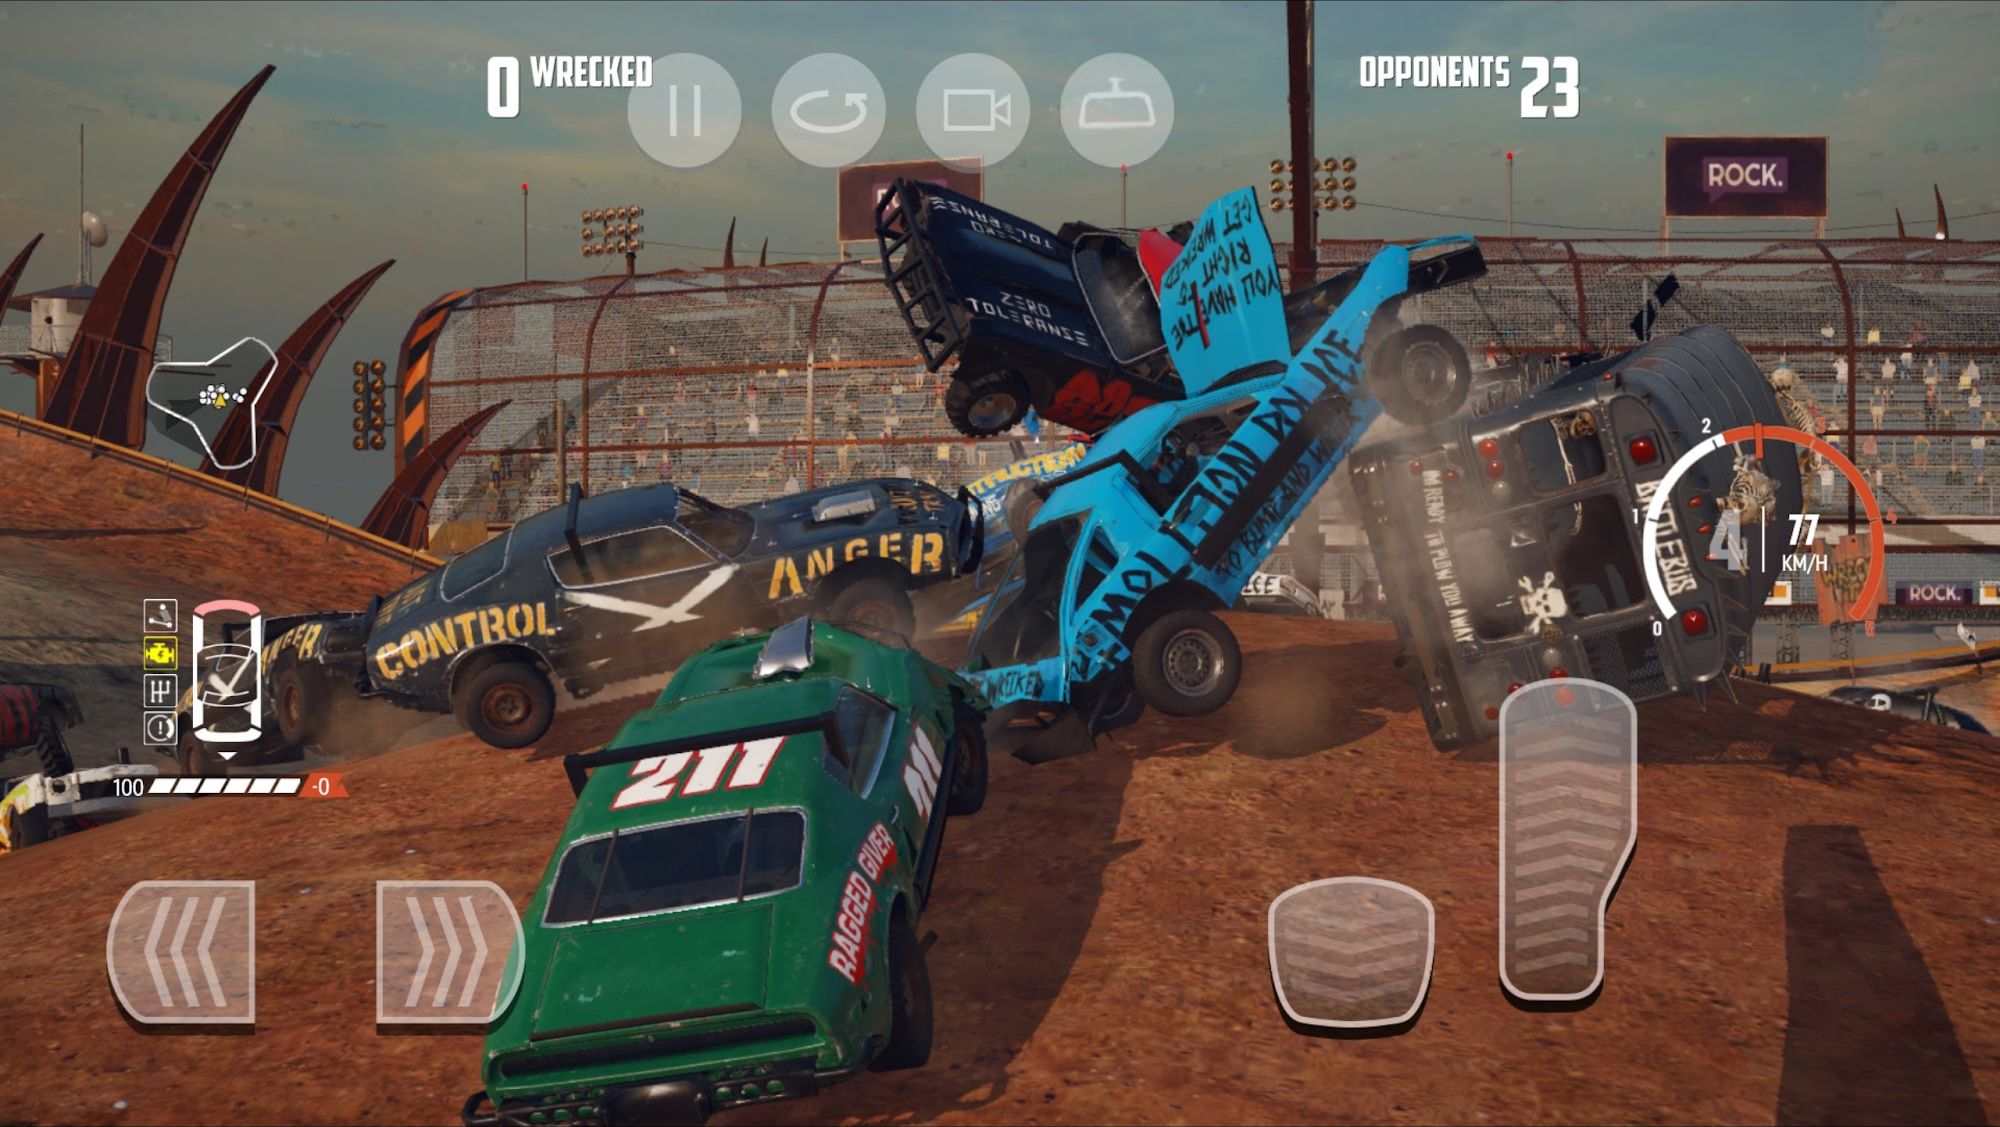 Wreckfest - Android game screenshots.